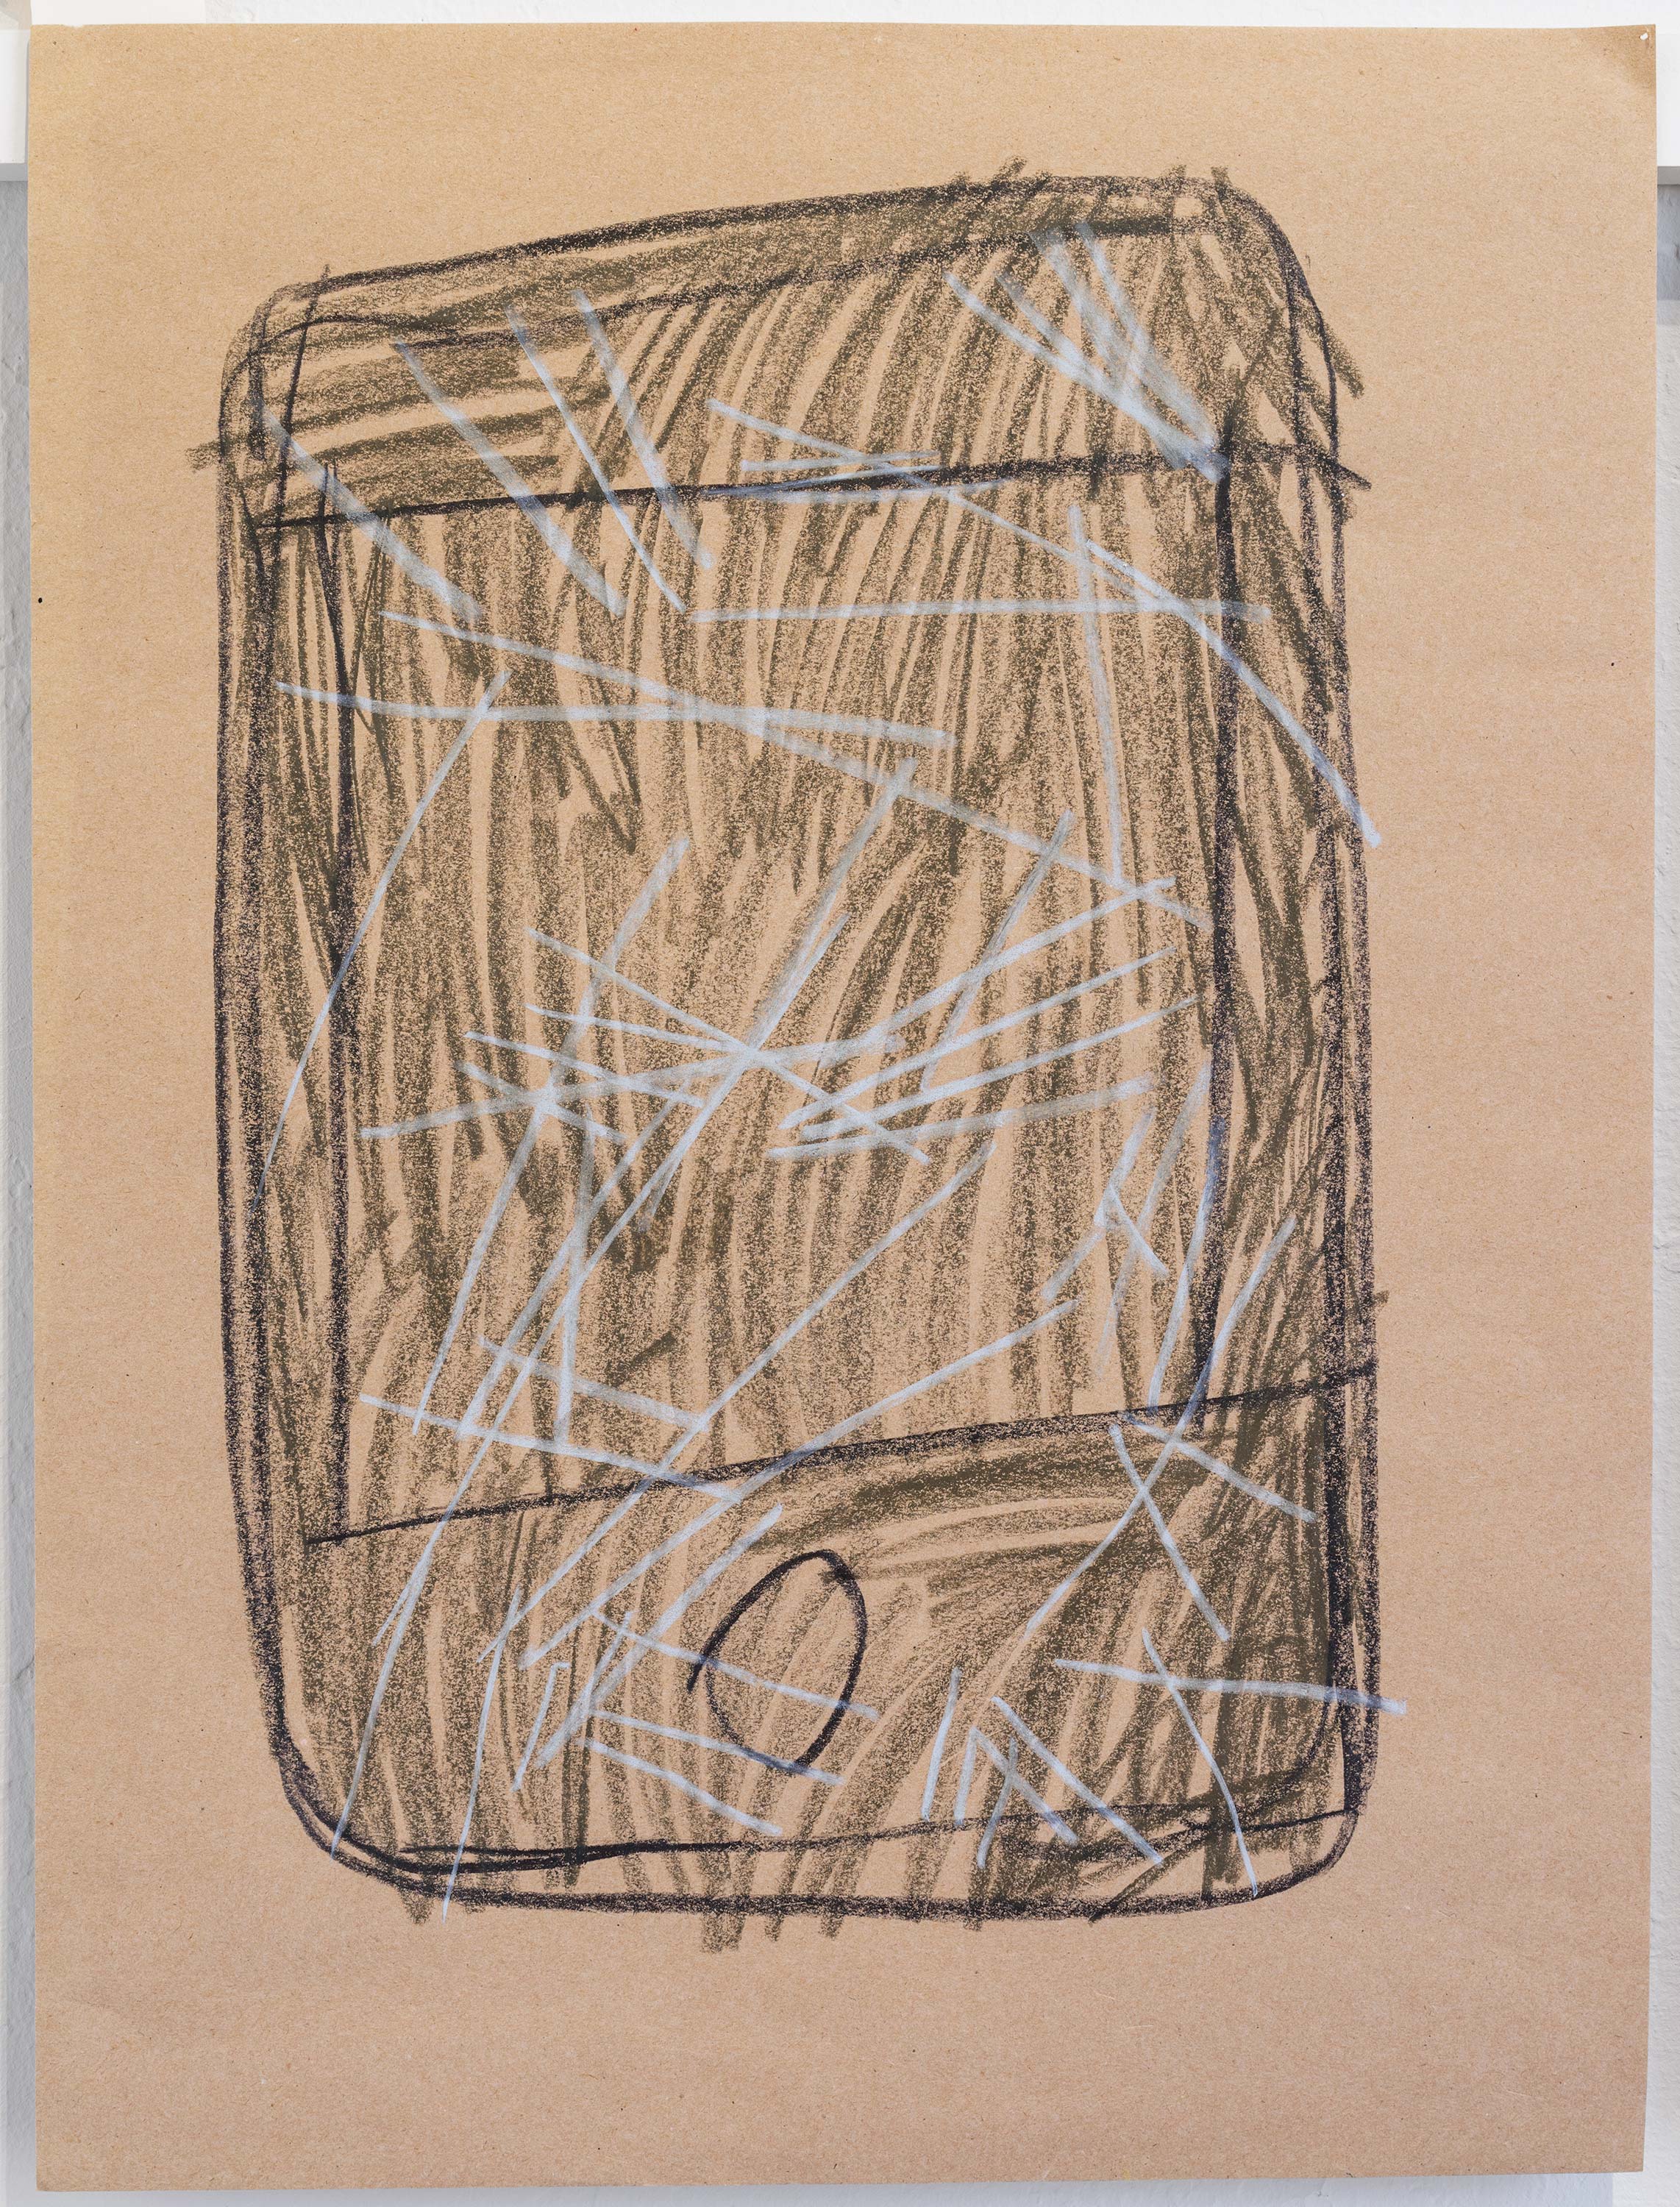 Al Freeman<br>Broken phone 1<br>2015<br>Graphite and oil pastel on paper<br>18 x 24 inches (46 x 61 cm)